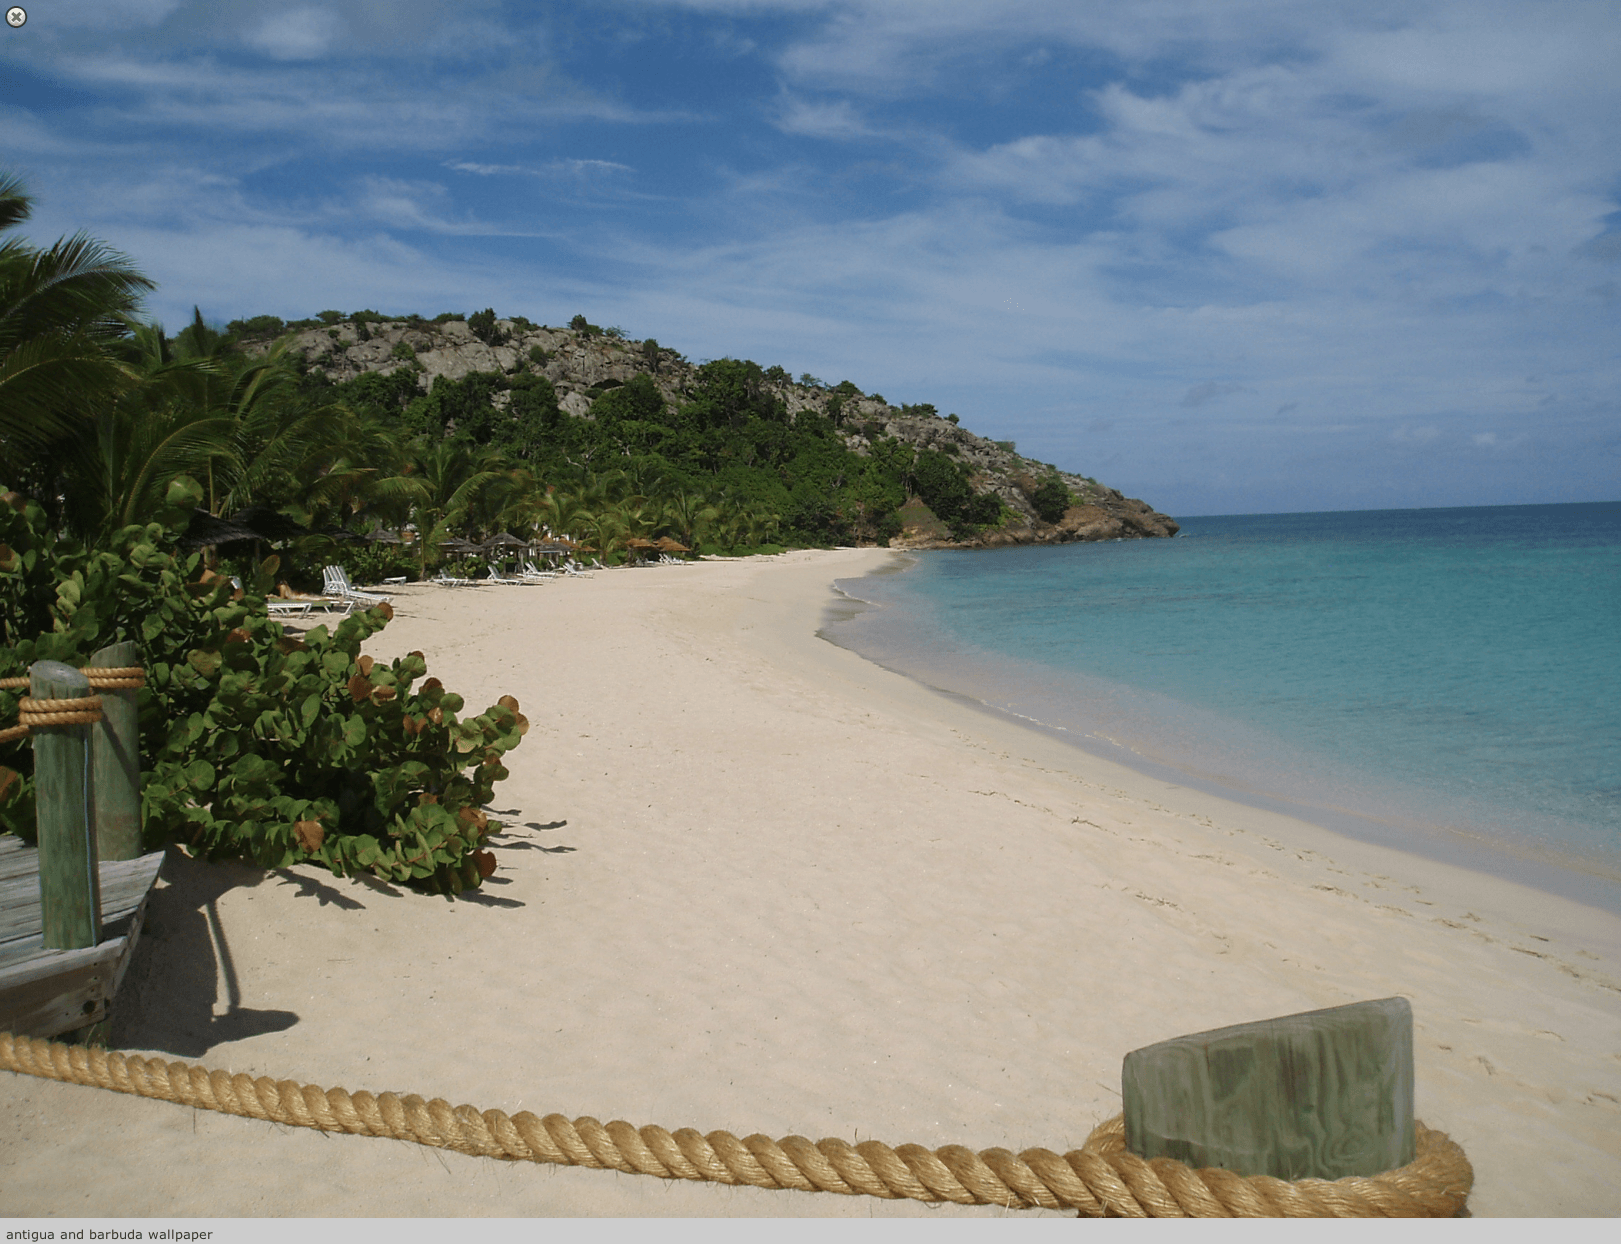 Antigua and Barbuda Tax Rates